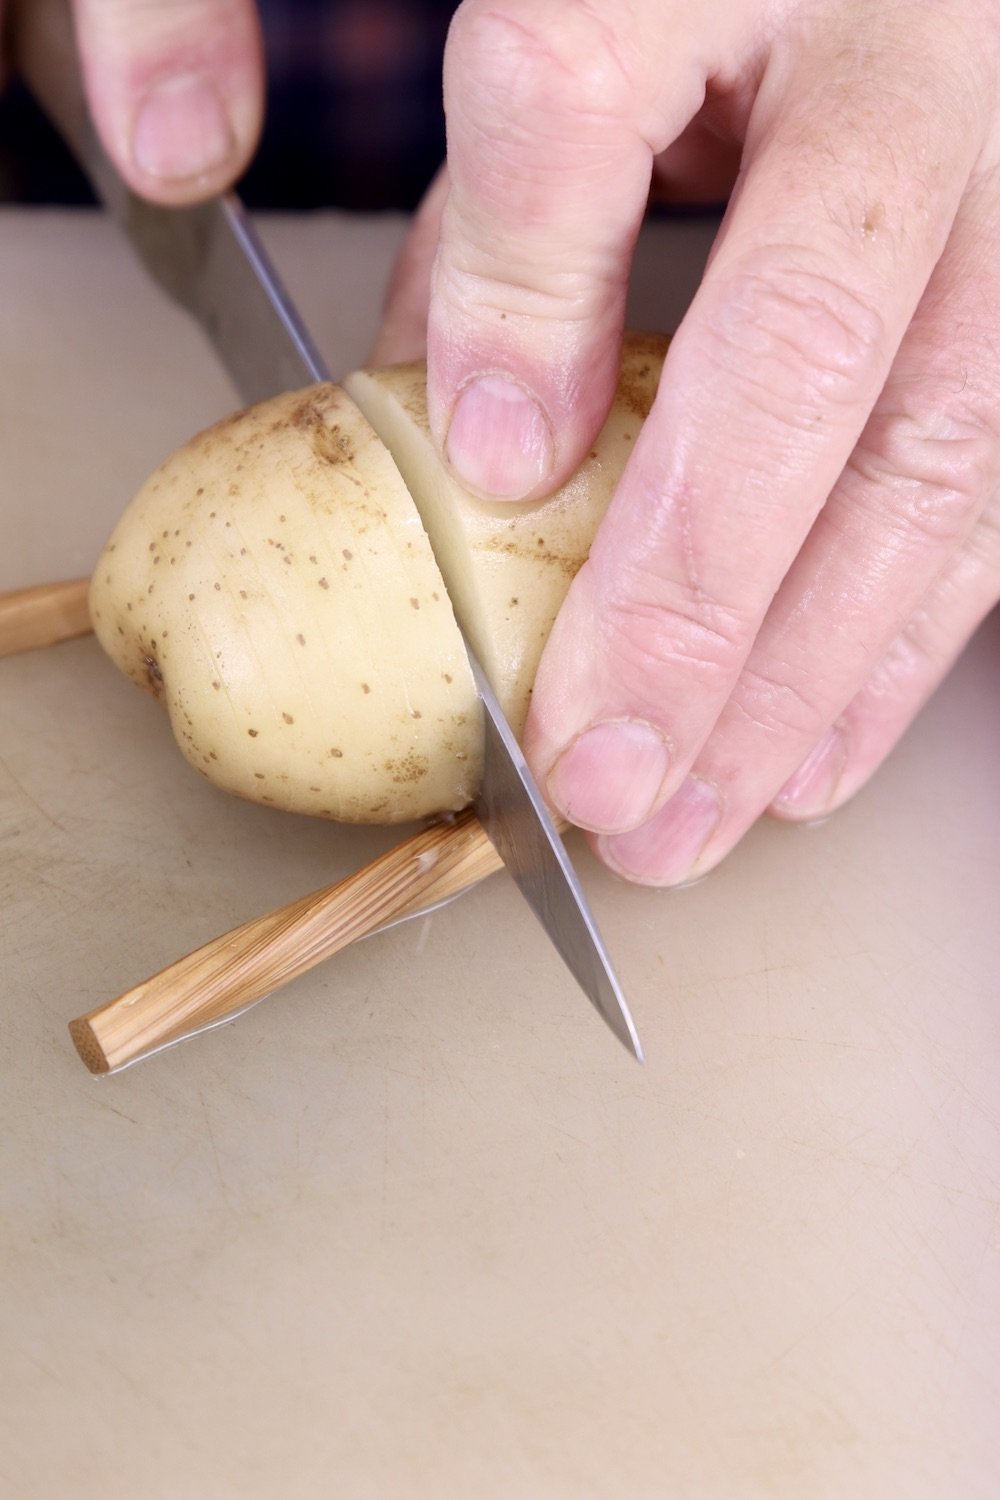 Cutting a potato in thin slices - potato resting between chop sticks